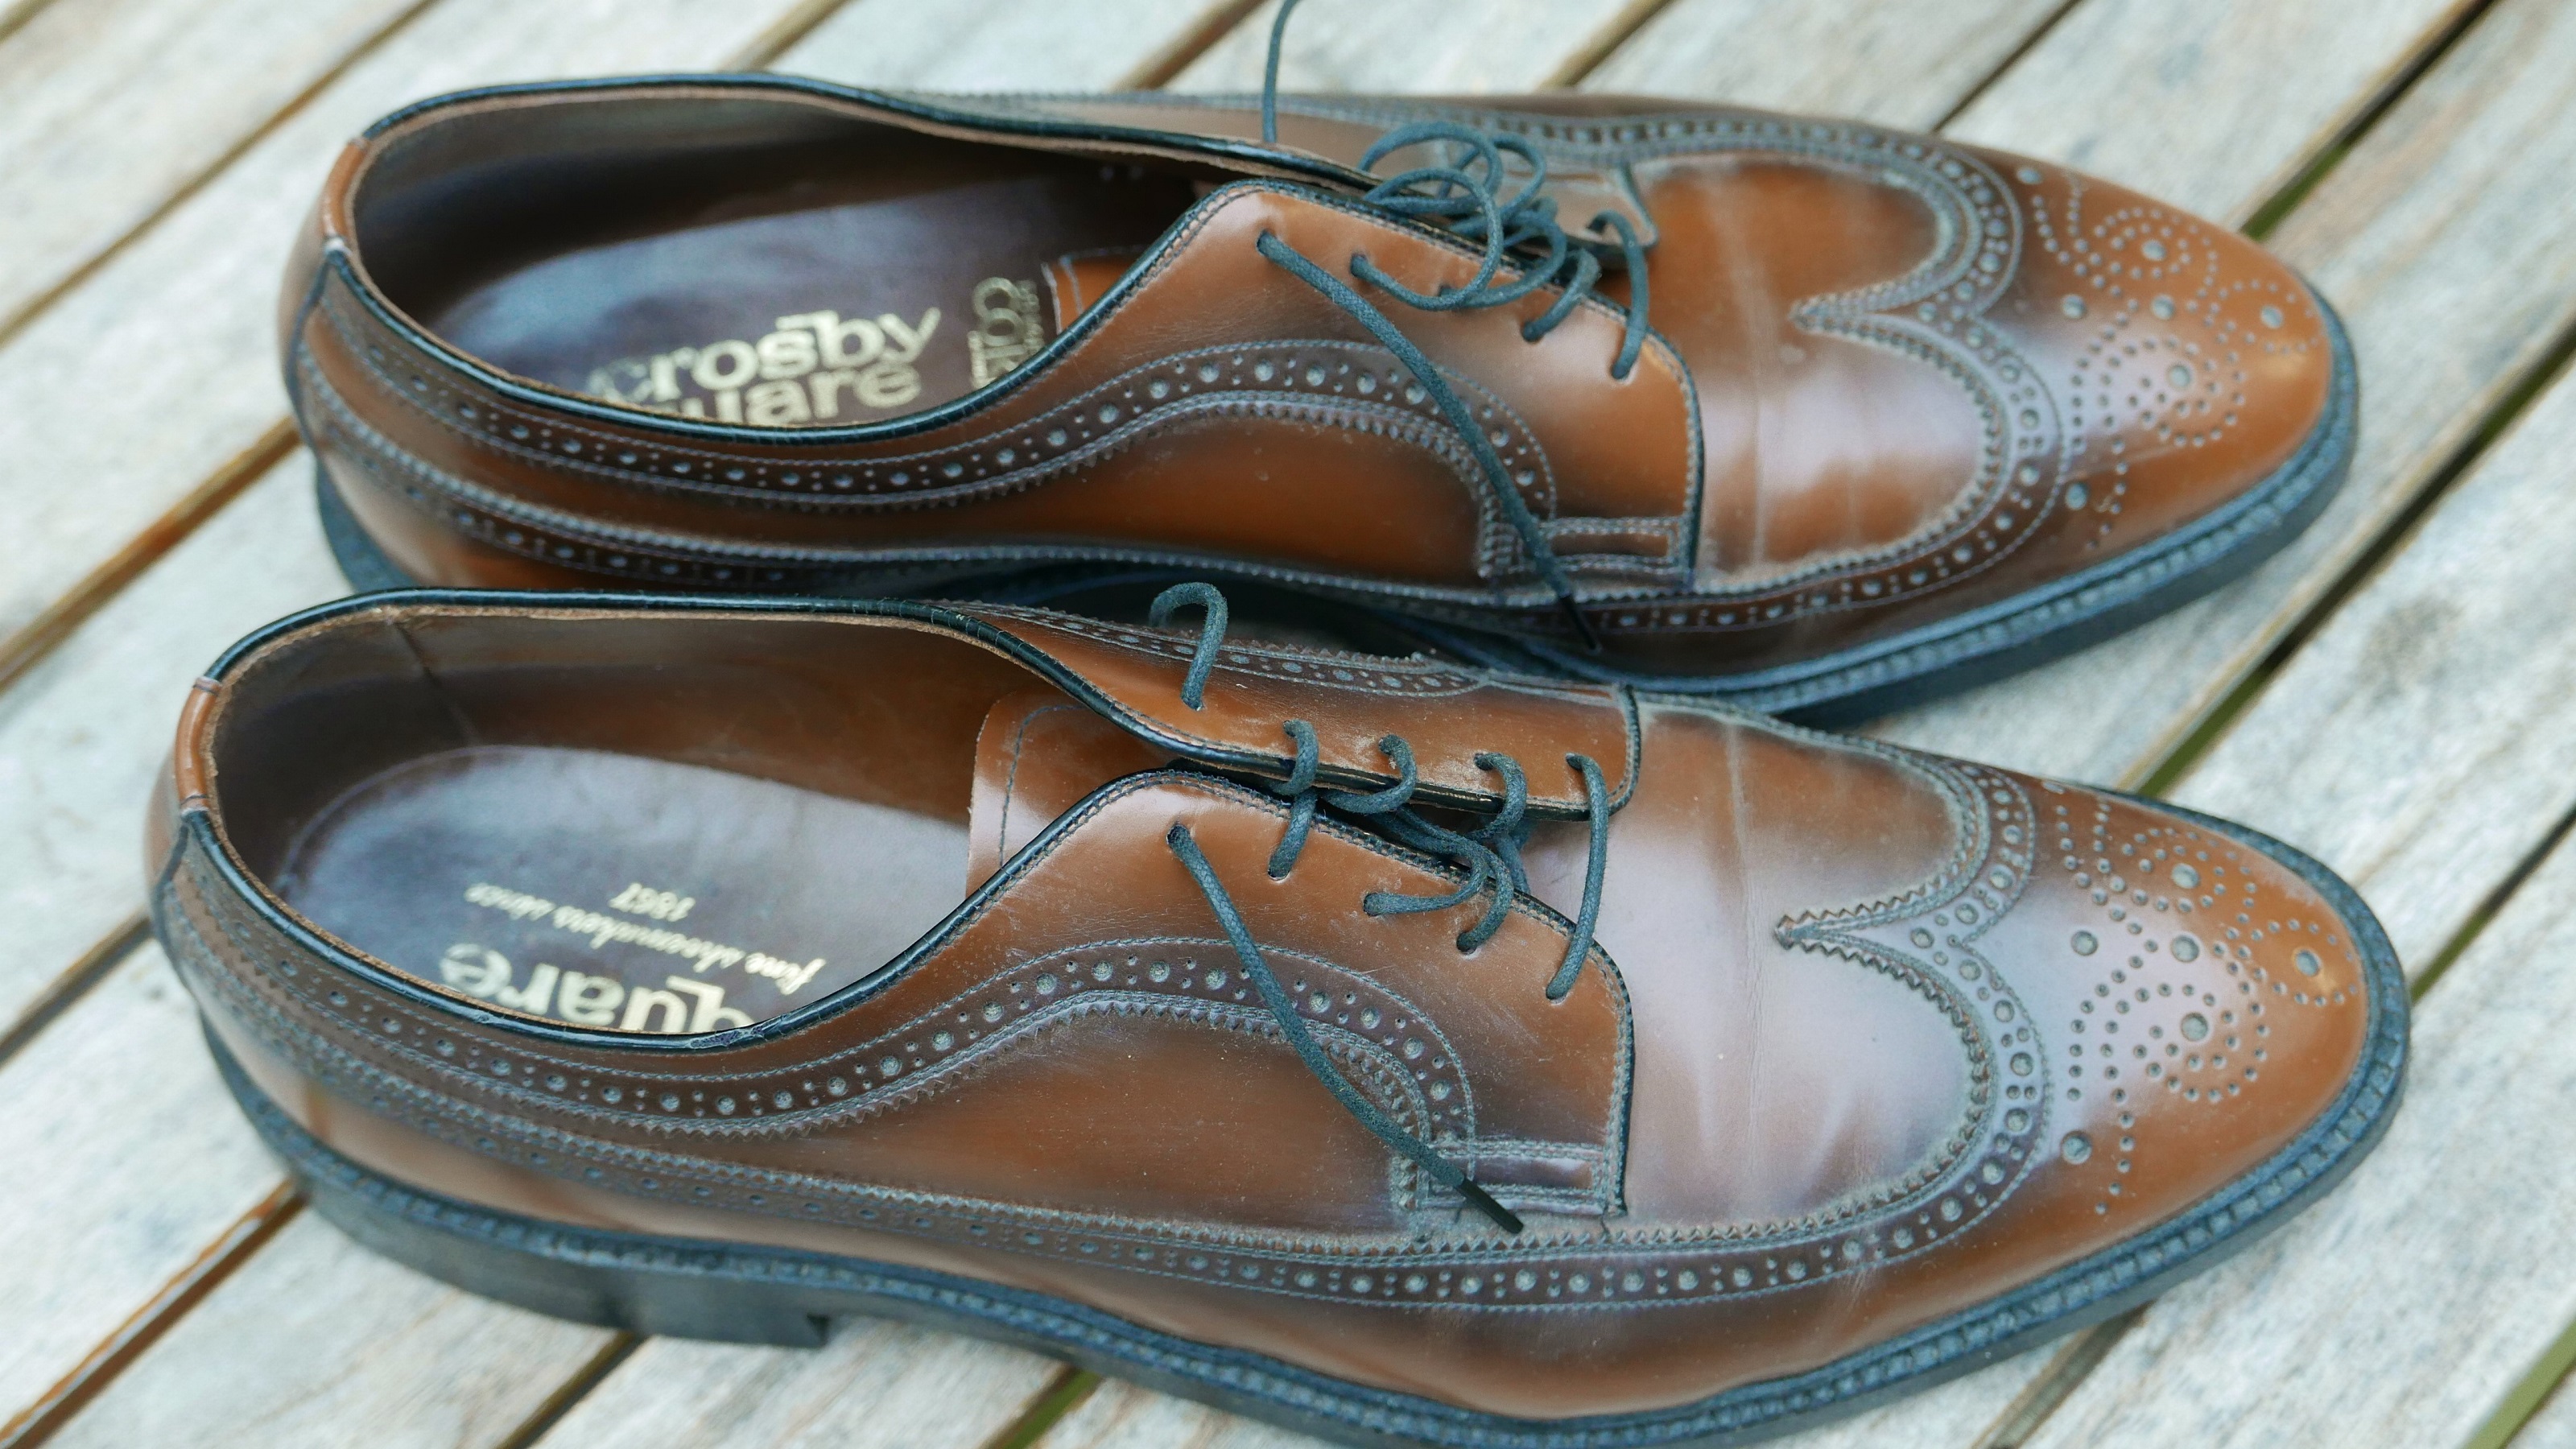 Dupont poromeric shoes